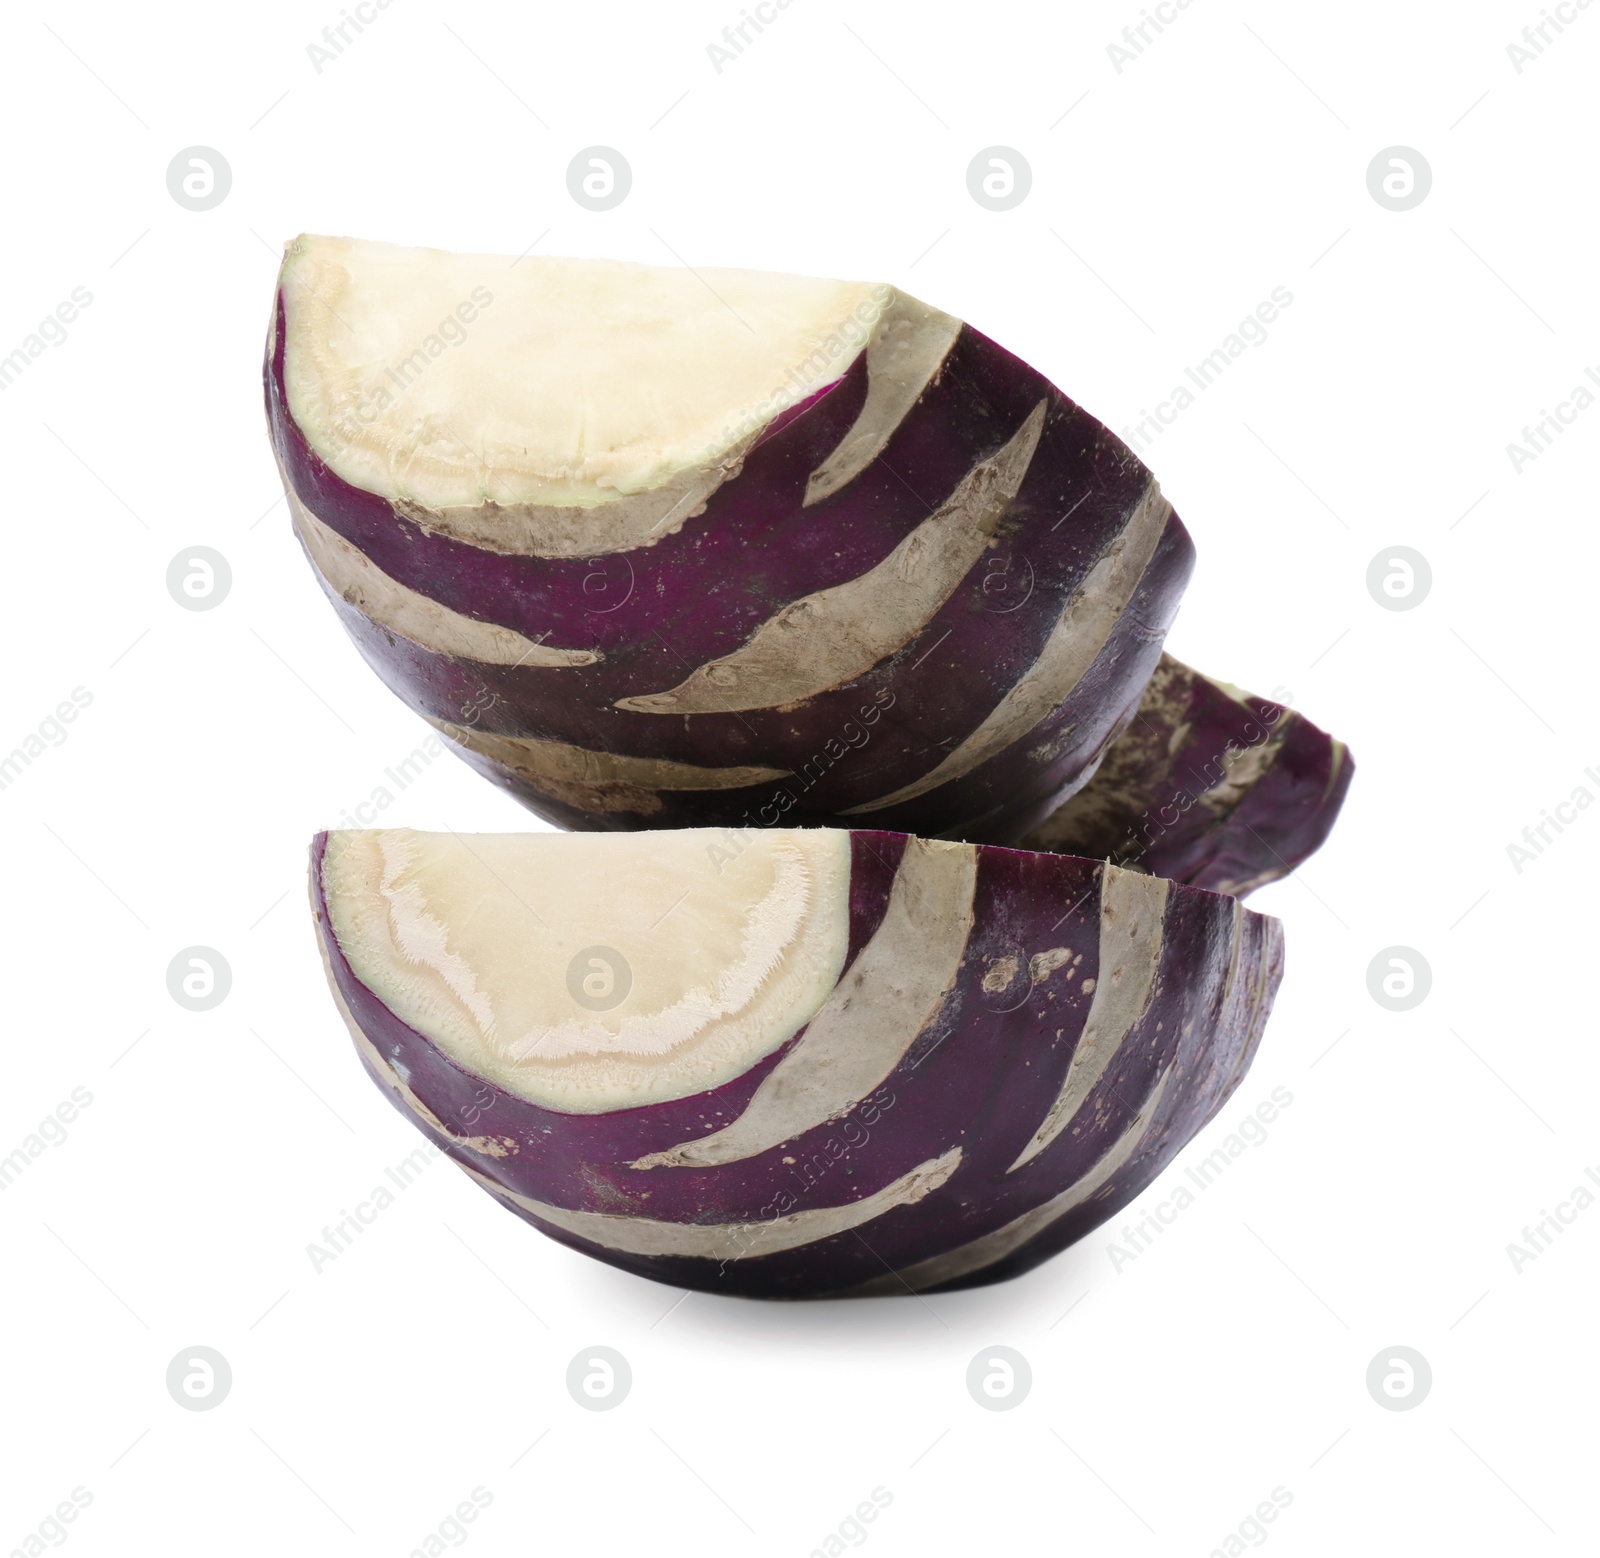 Photo of Pieces of tasty Kohlrabi cabbage on white background